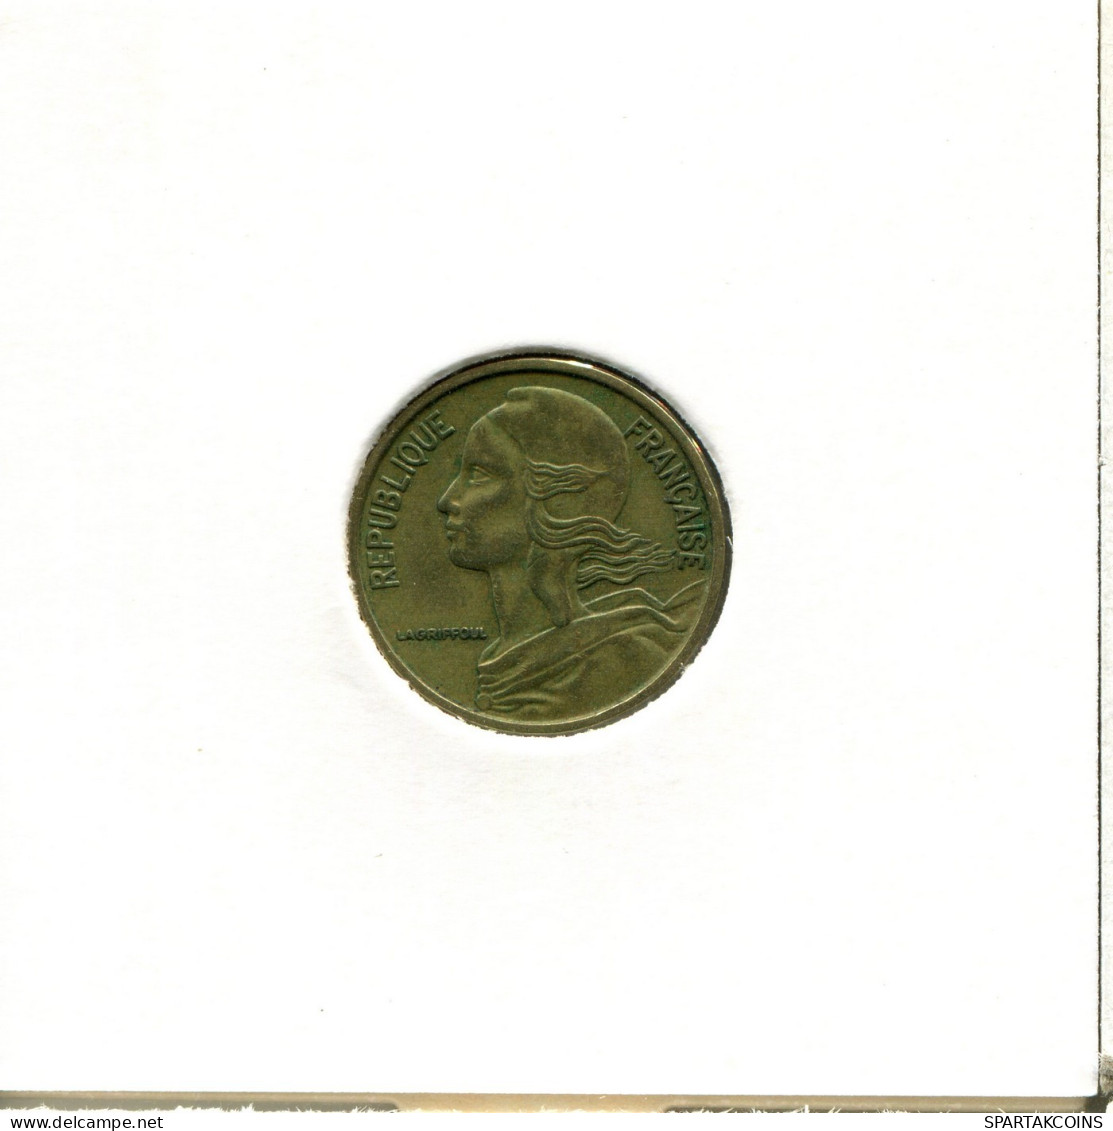 5 CENTIMES 1966 FRANCE Coin #AX056.U.A - 5 Centimes